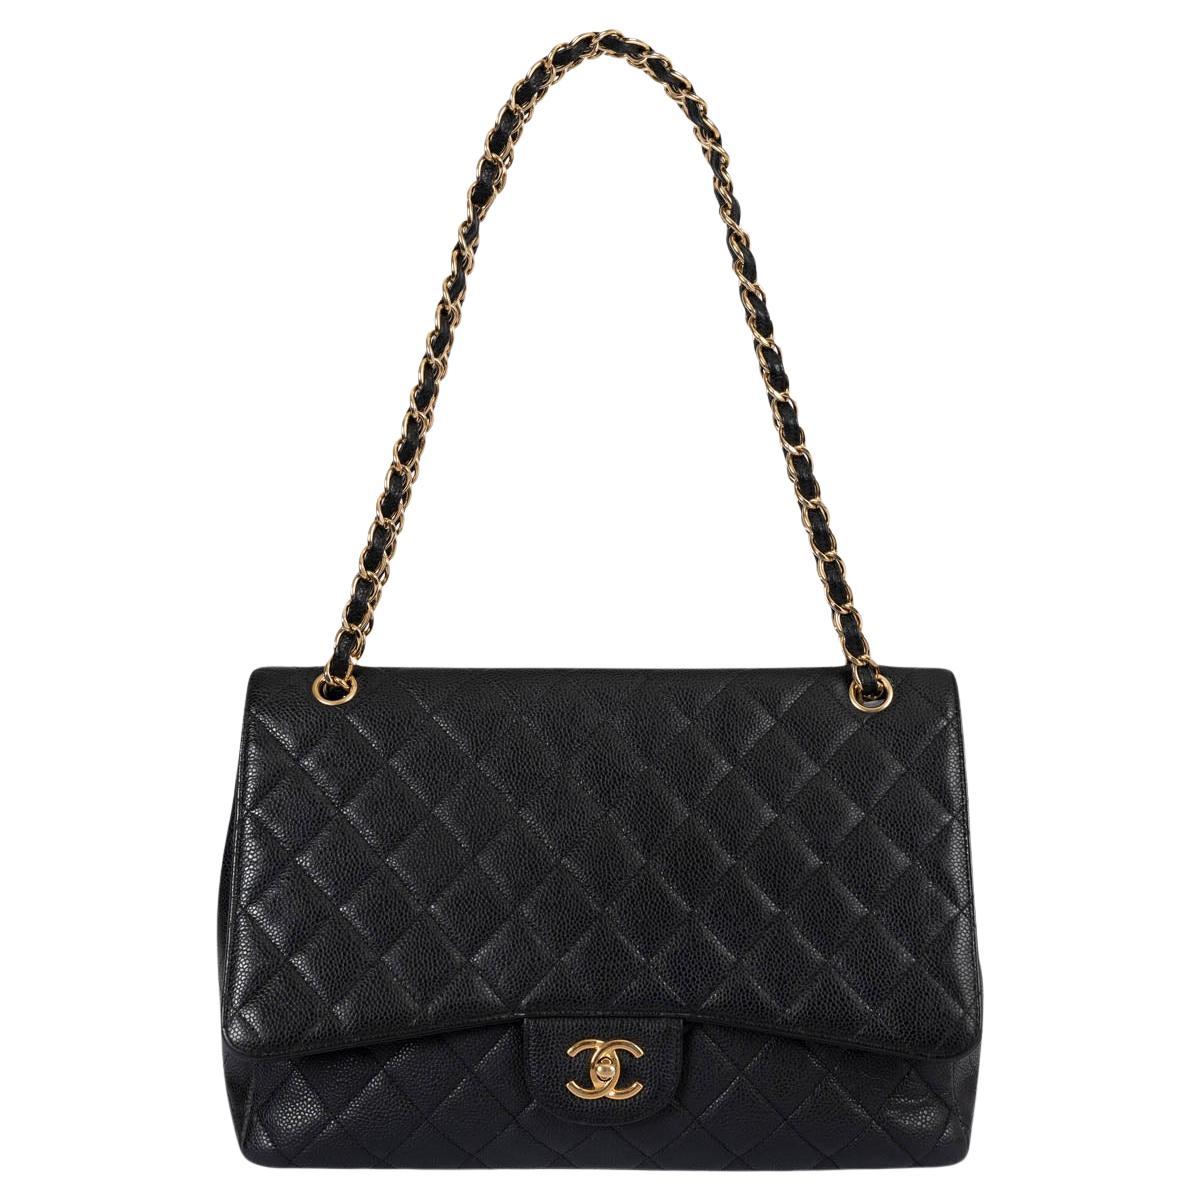 CHANEL black Caviar leather CLASSIC MAXI SINGLE FLAP Shoulder Bag For Sale